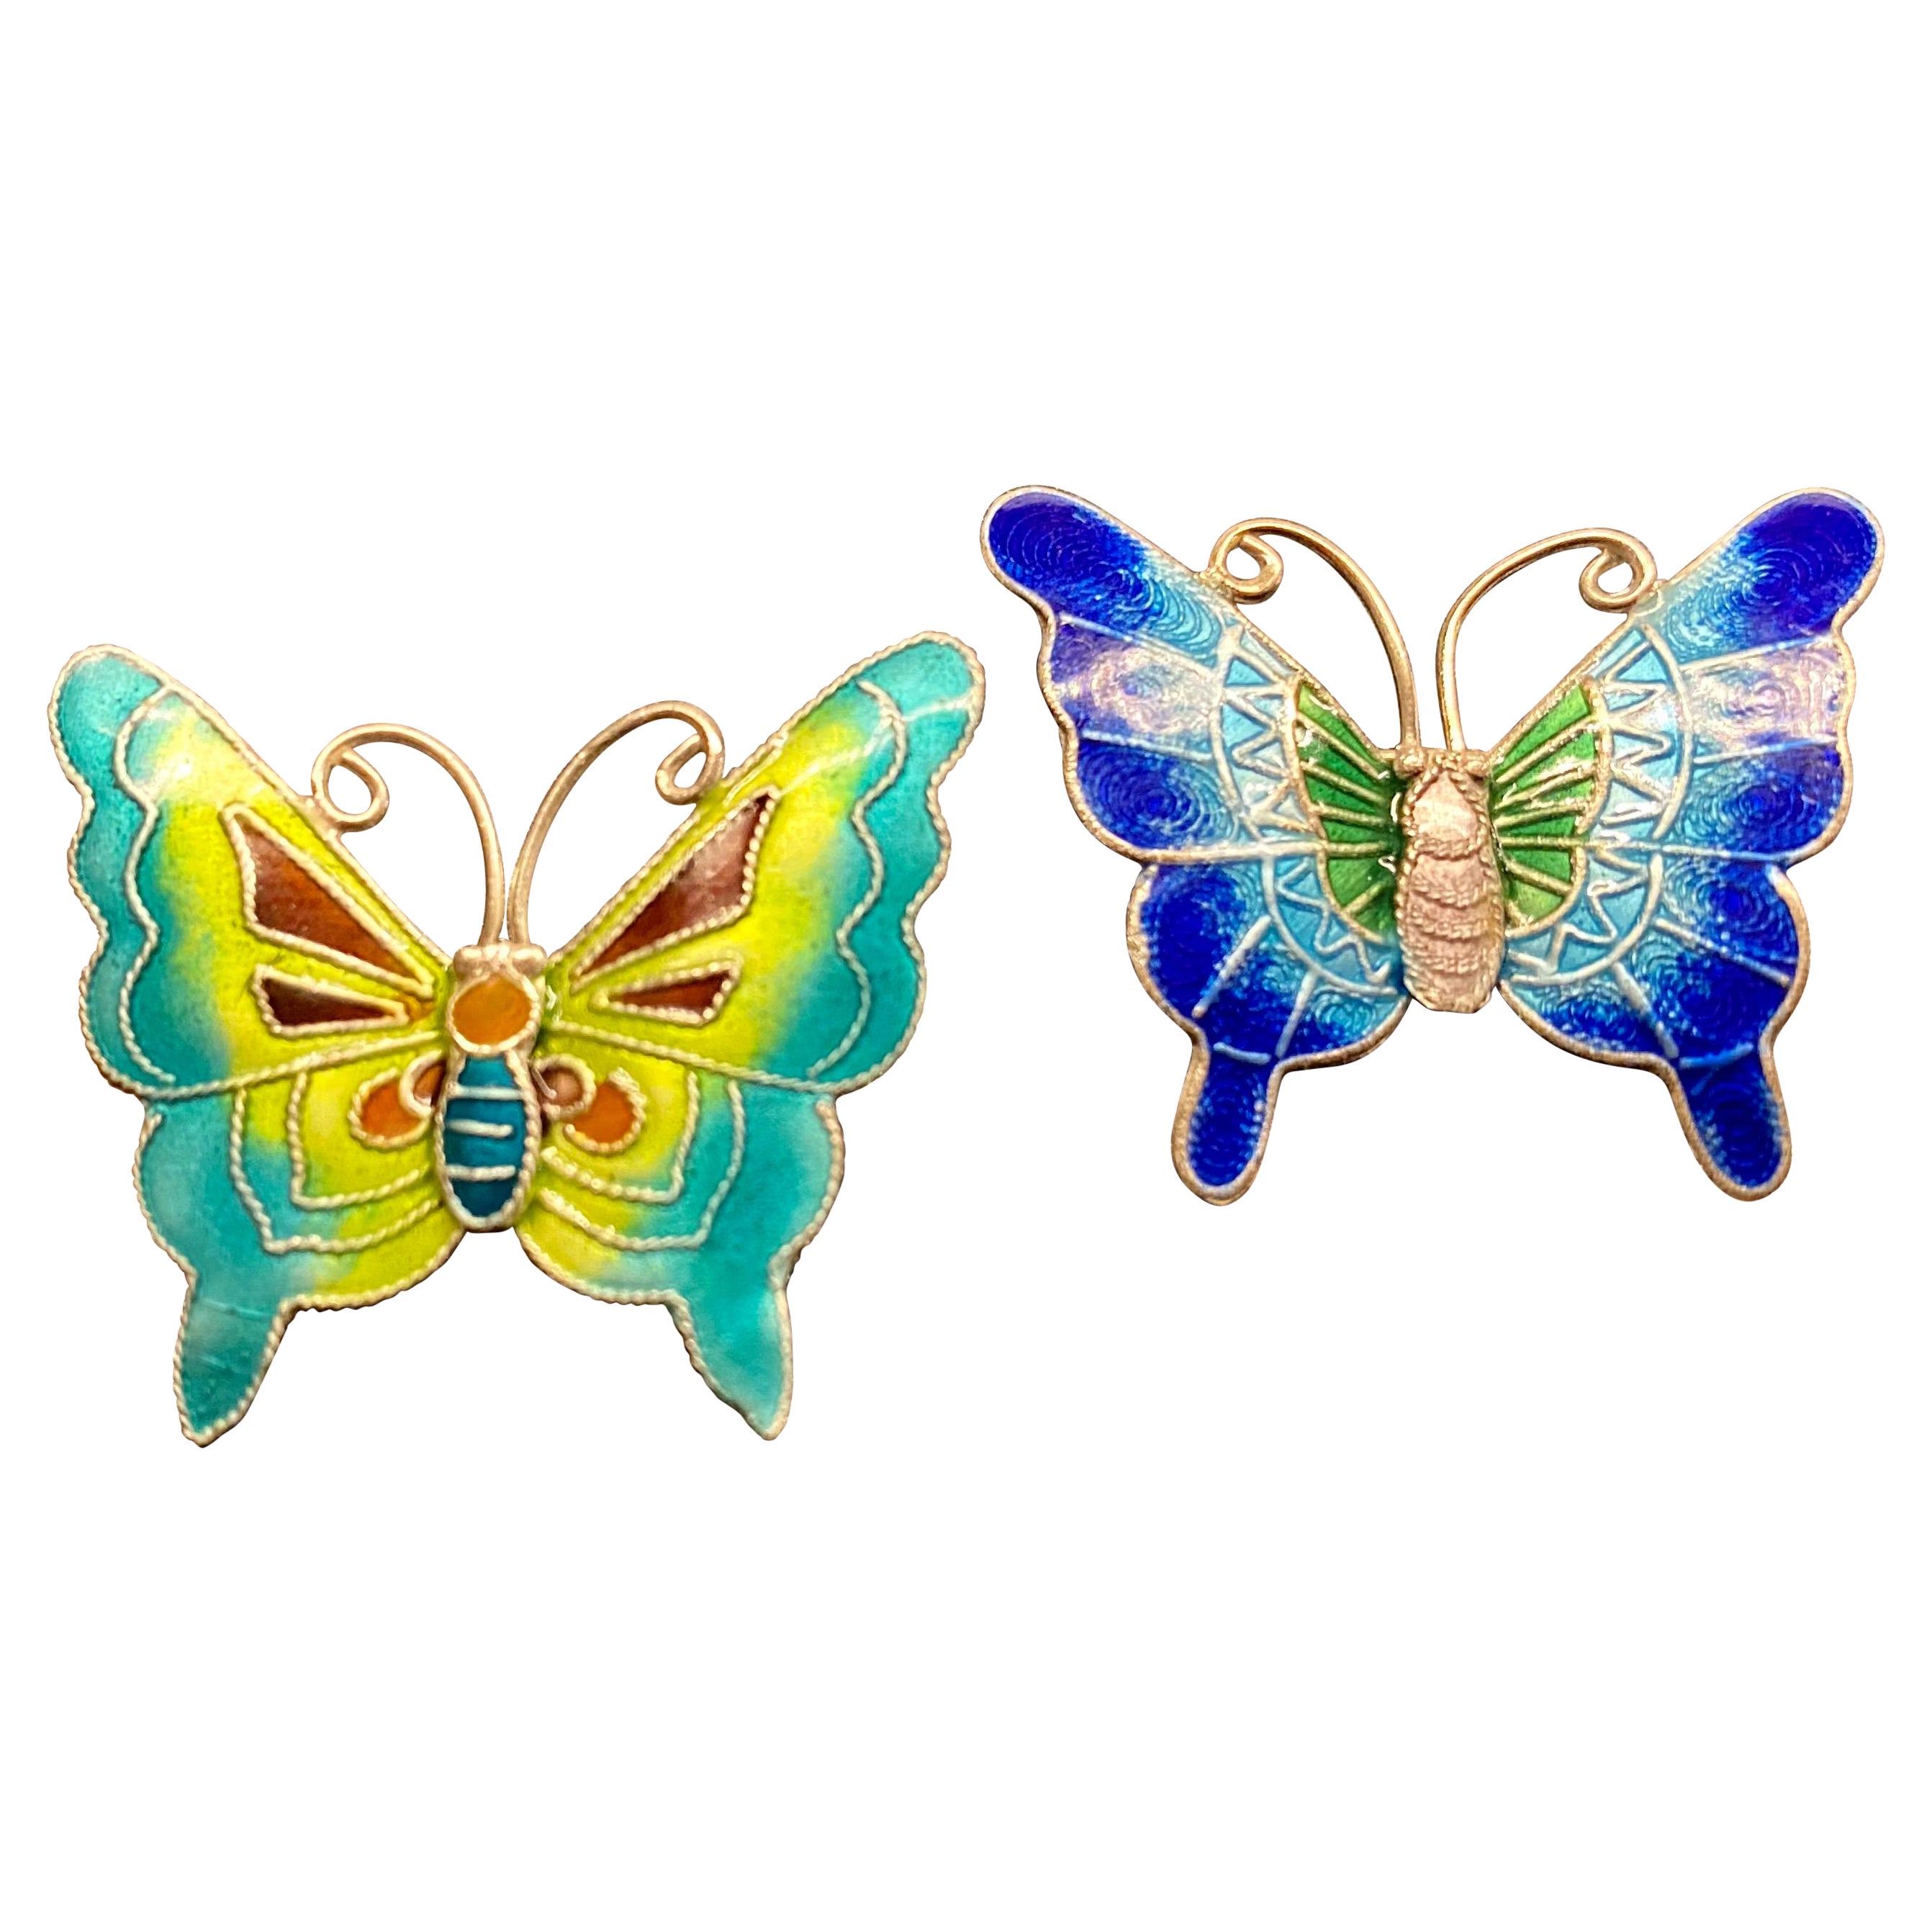 Sterling Silver Enameled Butterfly Brooch Pair